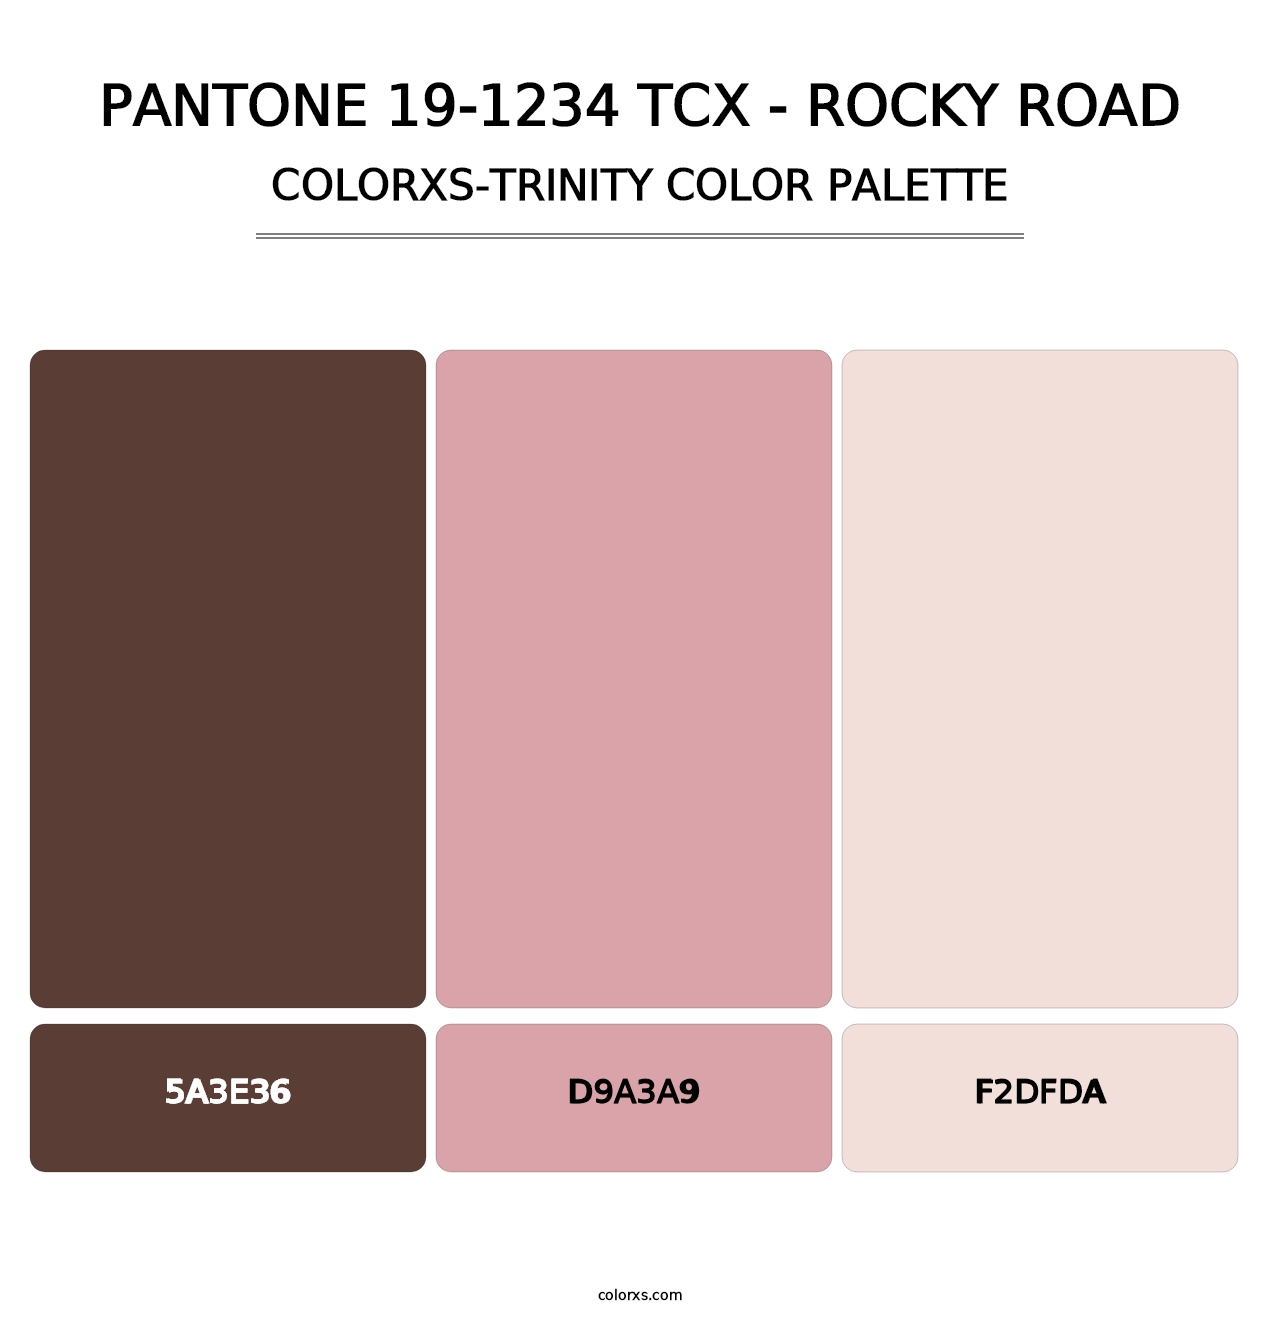 PANTONE 19-1234 TCX - Rocky Road - Colorxs Trinity Palette